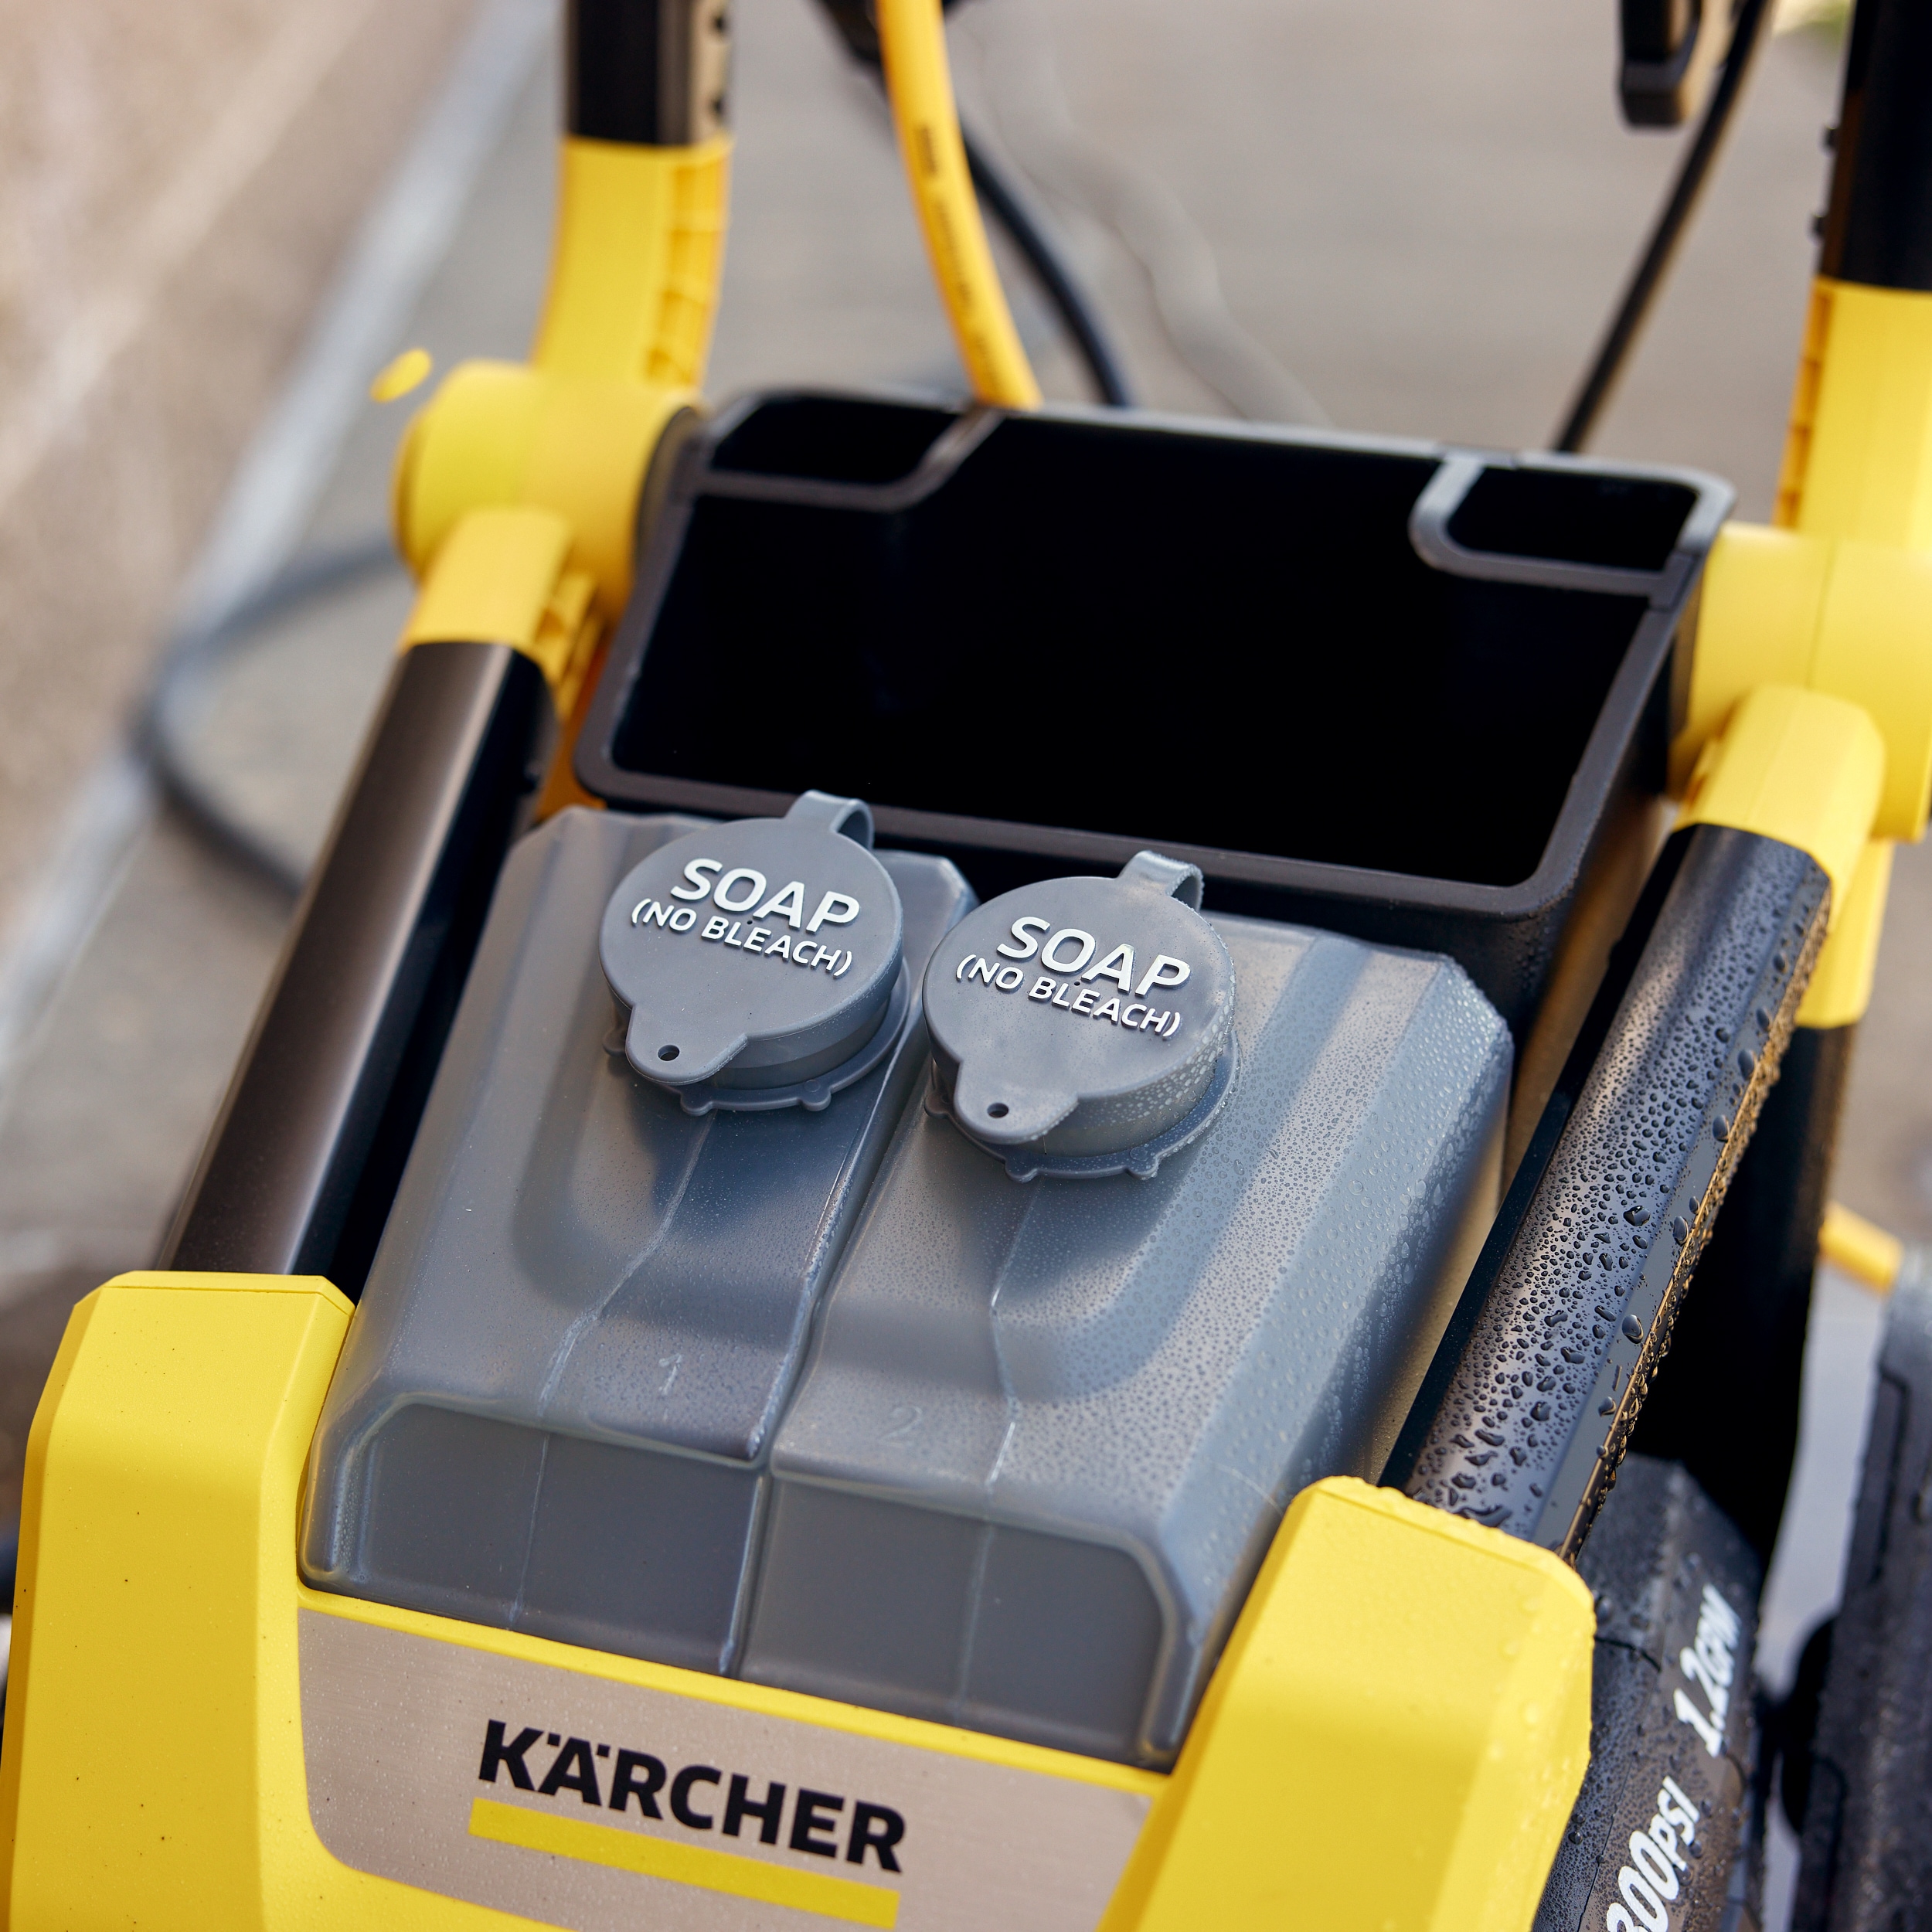 Karcher Pressure Washers & Accessories at